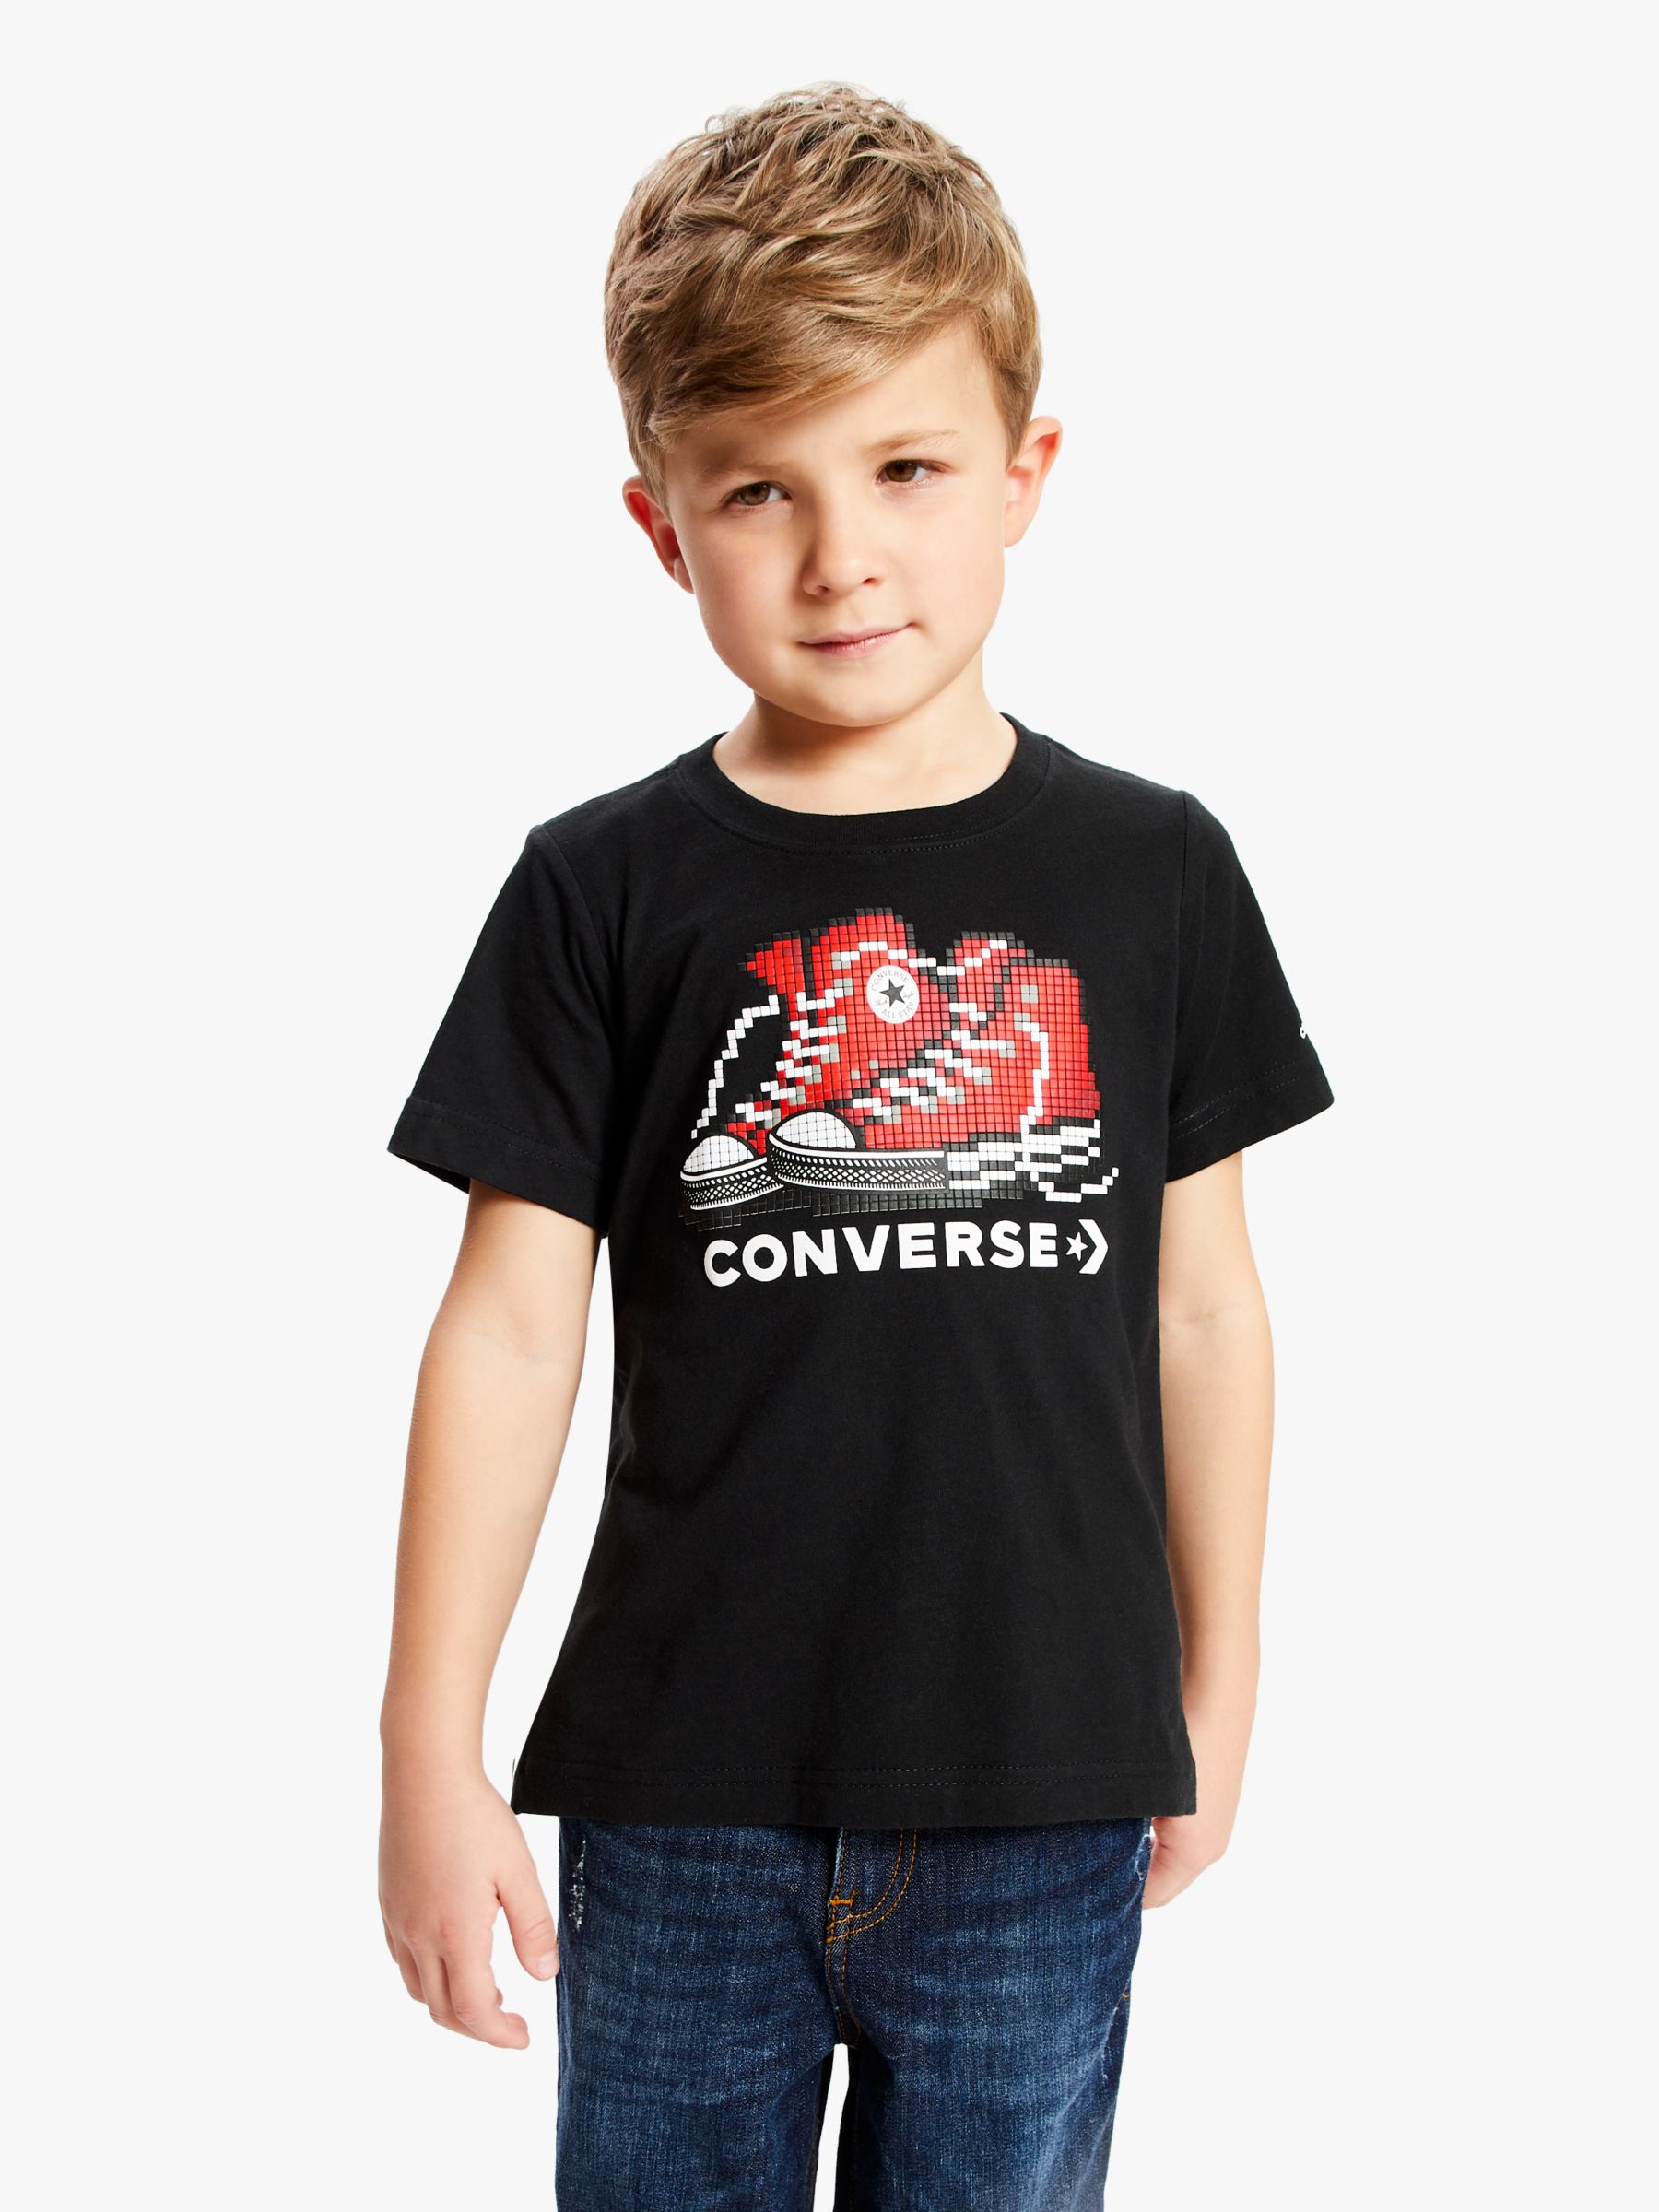 converse t shirt boys